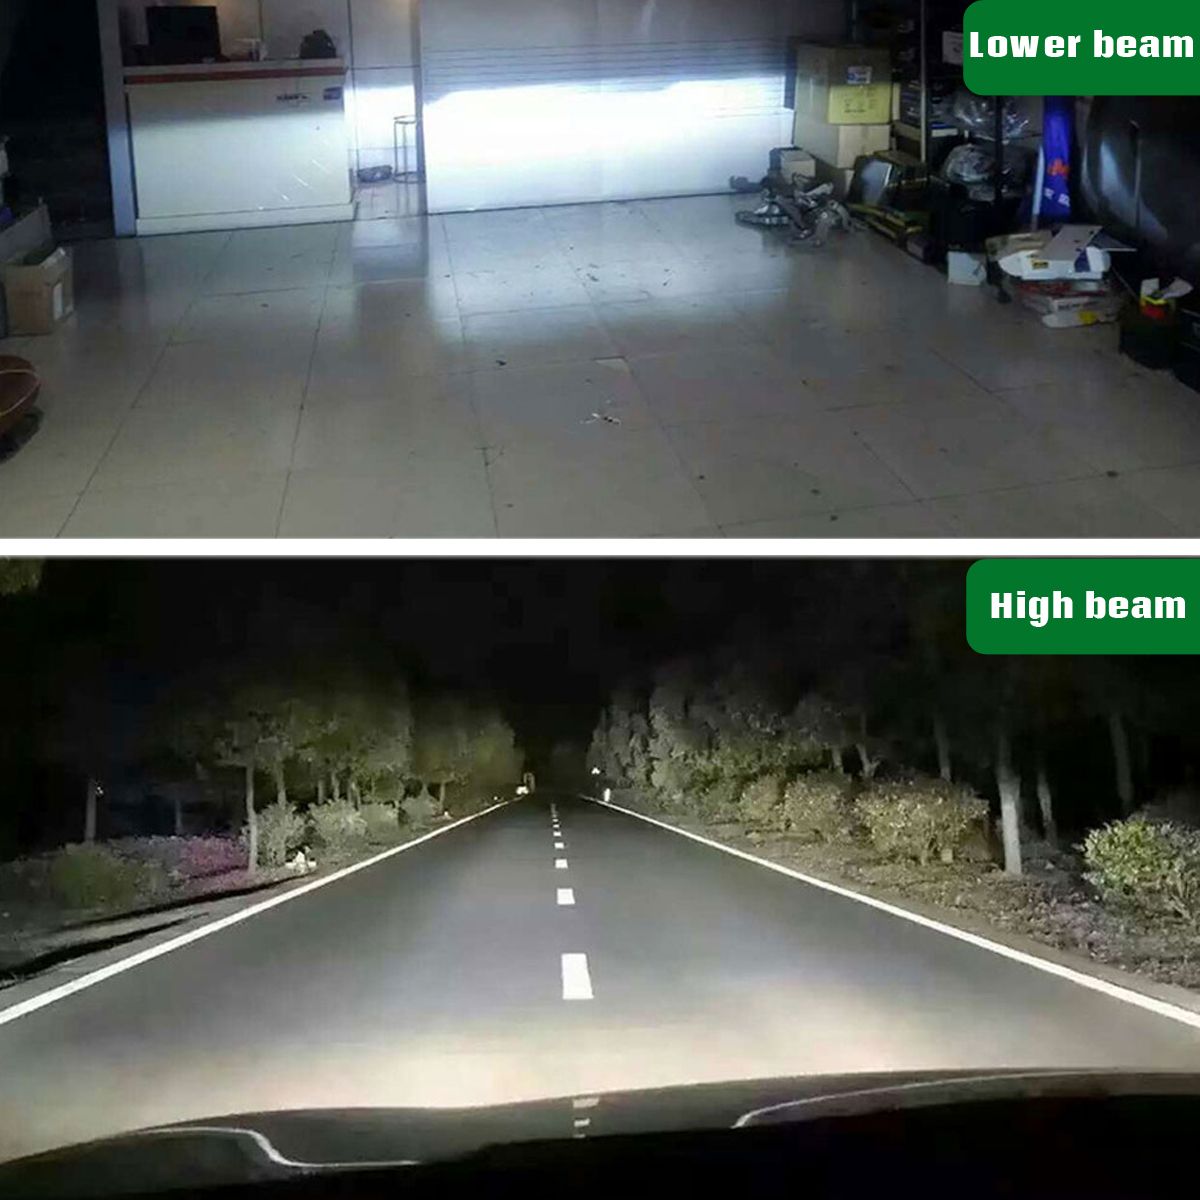 2Pcs-Car-LED-Headlights-Fog-Lamps-Kits-High-Low-Beam-Replace-Bulbs-Turbo-H7-6500K-100W-12000LM-360-d-1636591